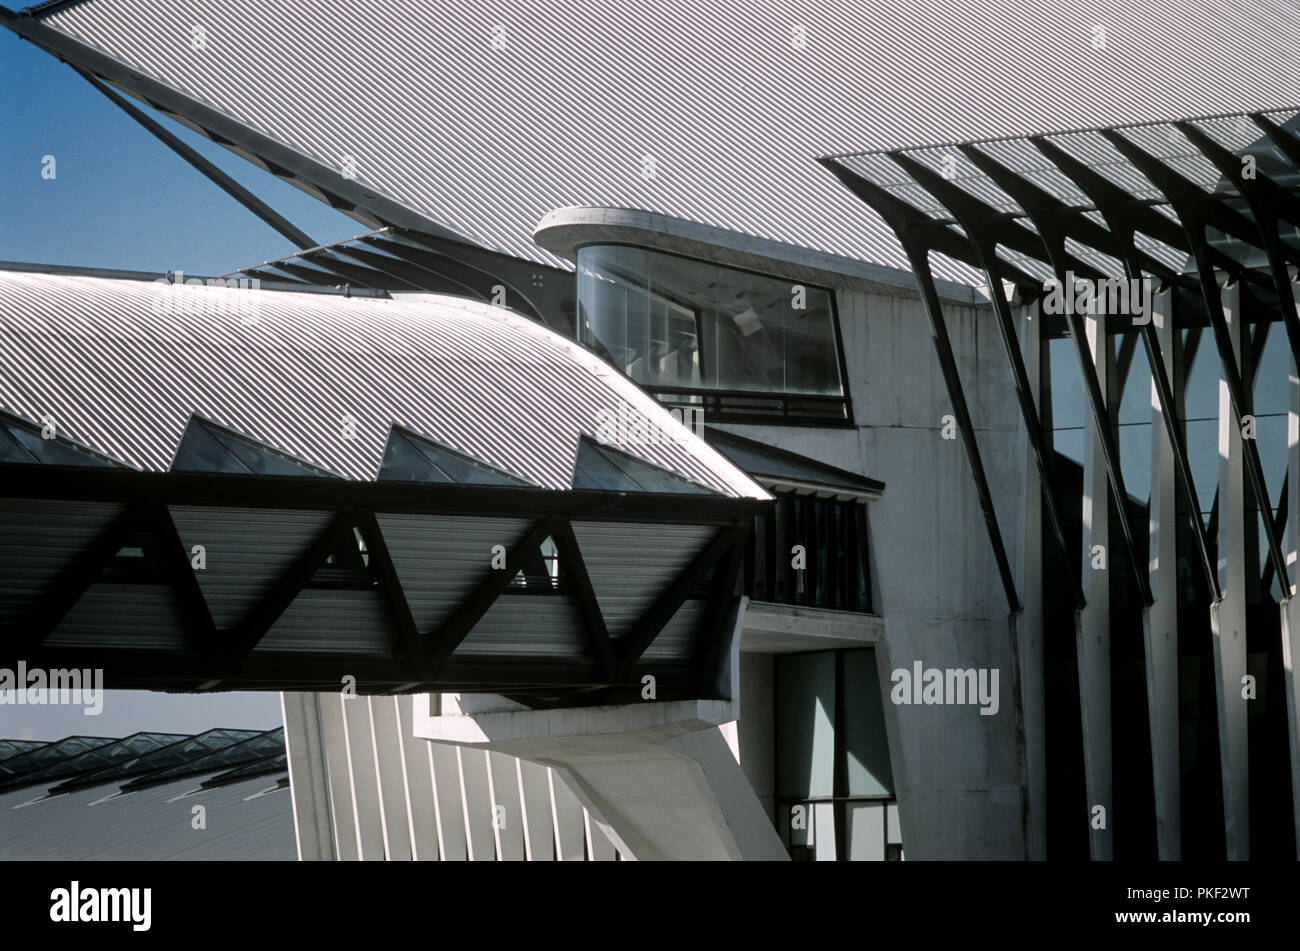 The Lyon-Saint-Exupéry TGV railway station in Colombier-Saugnieu, designed by Spanish architect Santiago Calatrava (France, 20/10/2007) Stock Photo